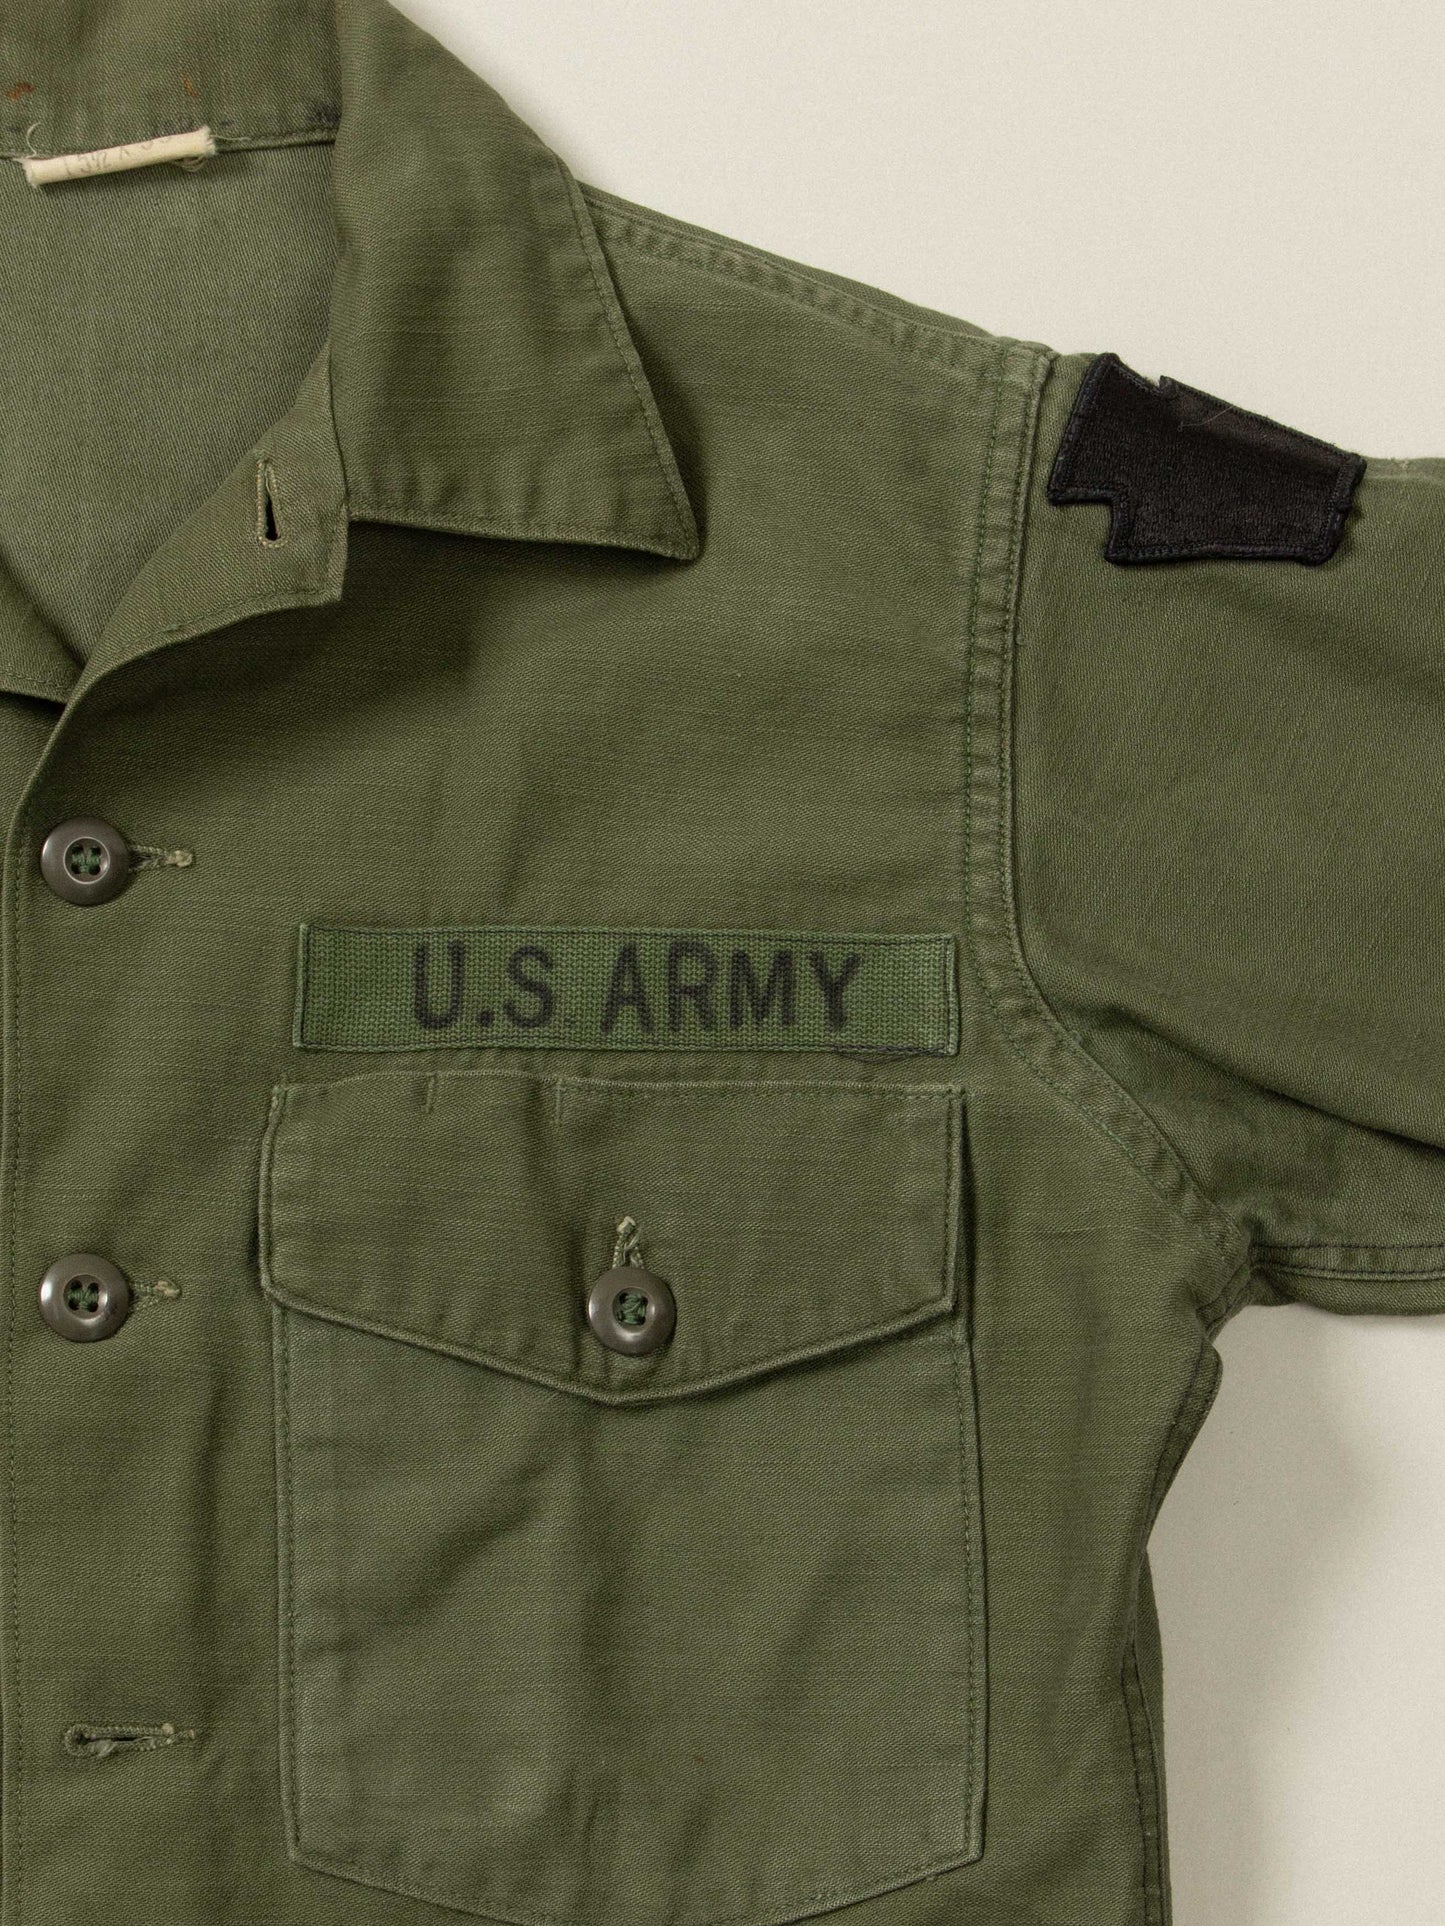 Vtg US Army OG 107 "Airborne" Fatigue Shirt (M)